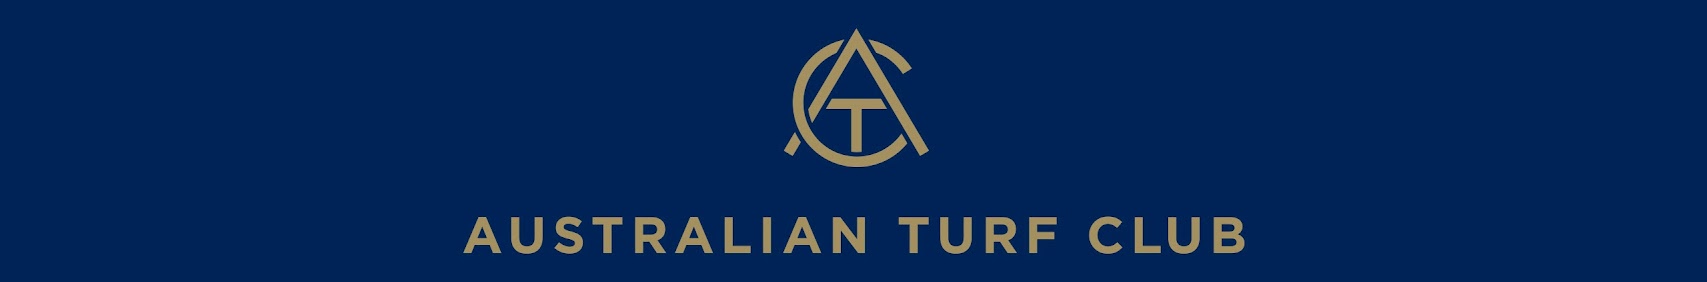 Australian Turf Club (ATC)